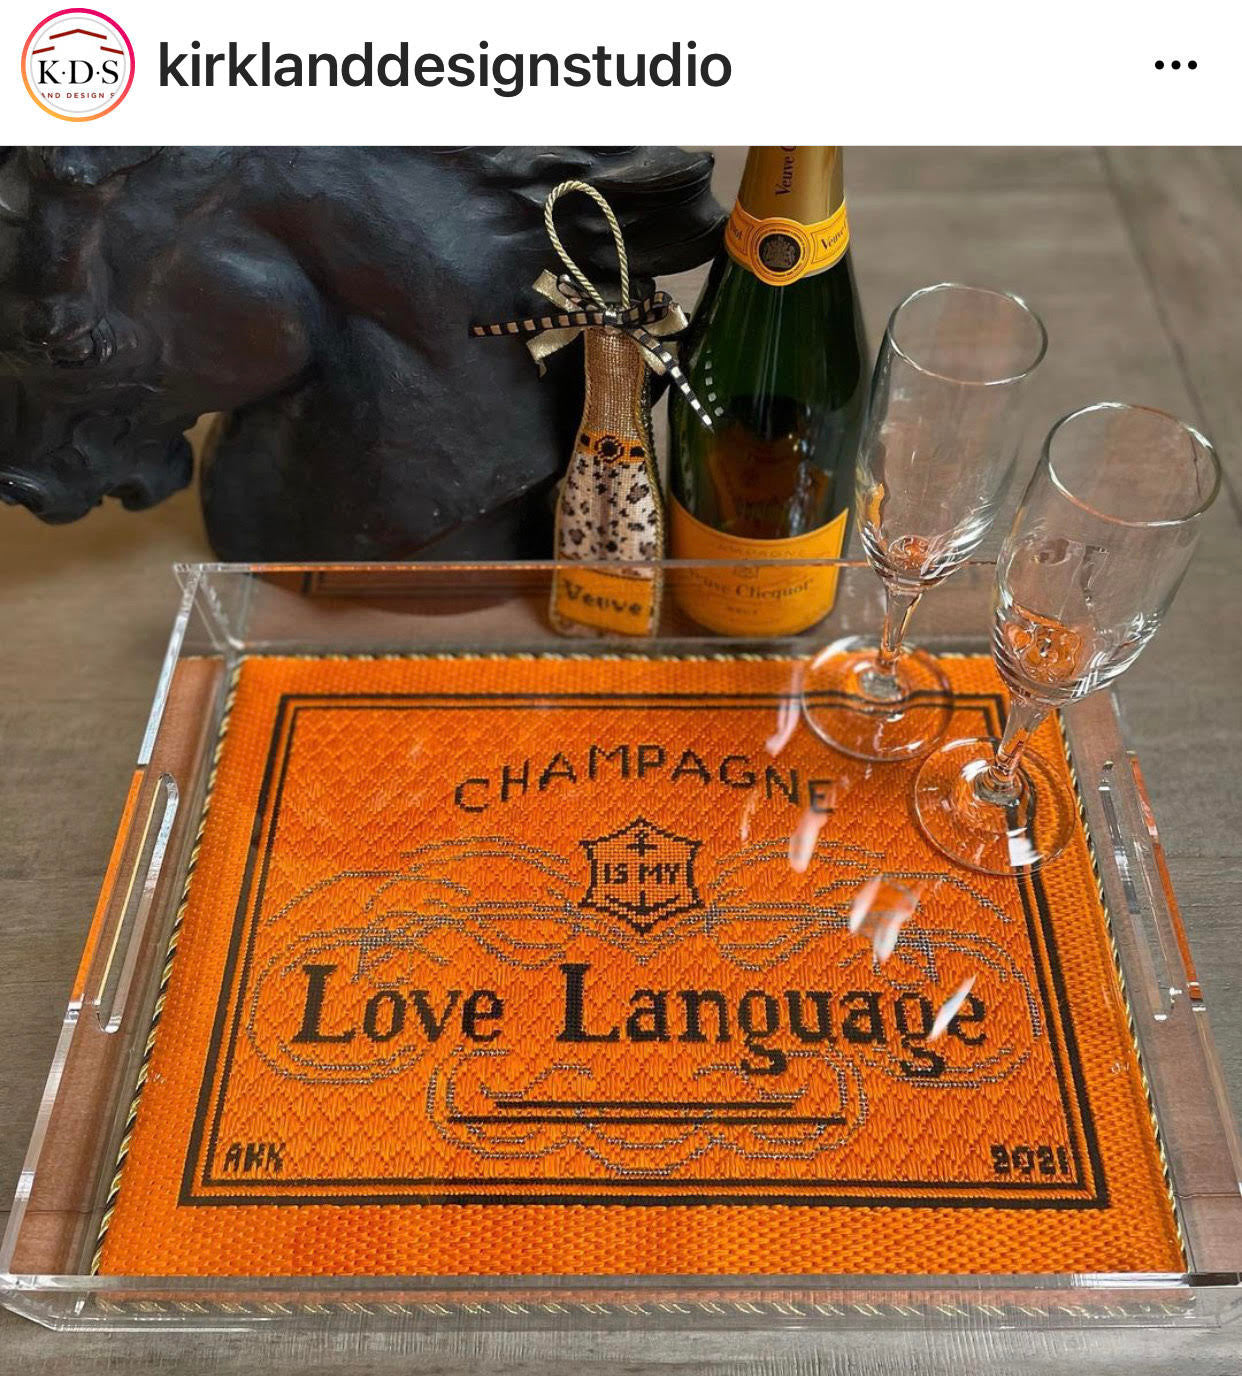 Gingham Stitchery Kirkland V-100 Champagne is My Love Language